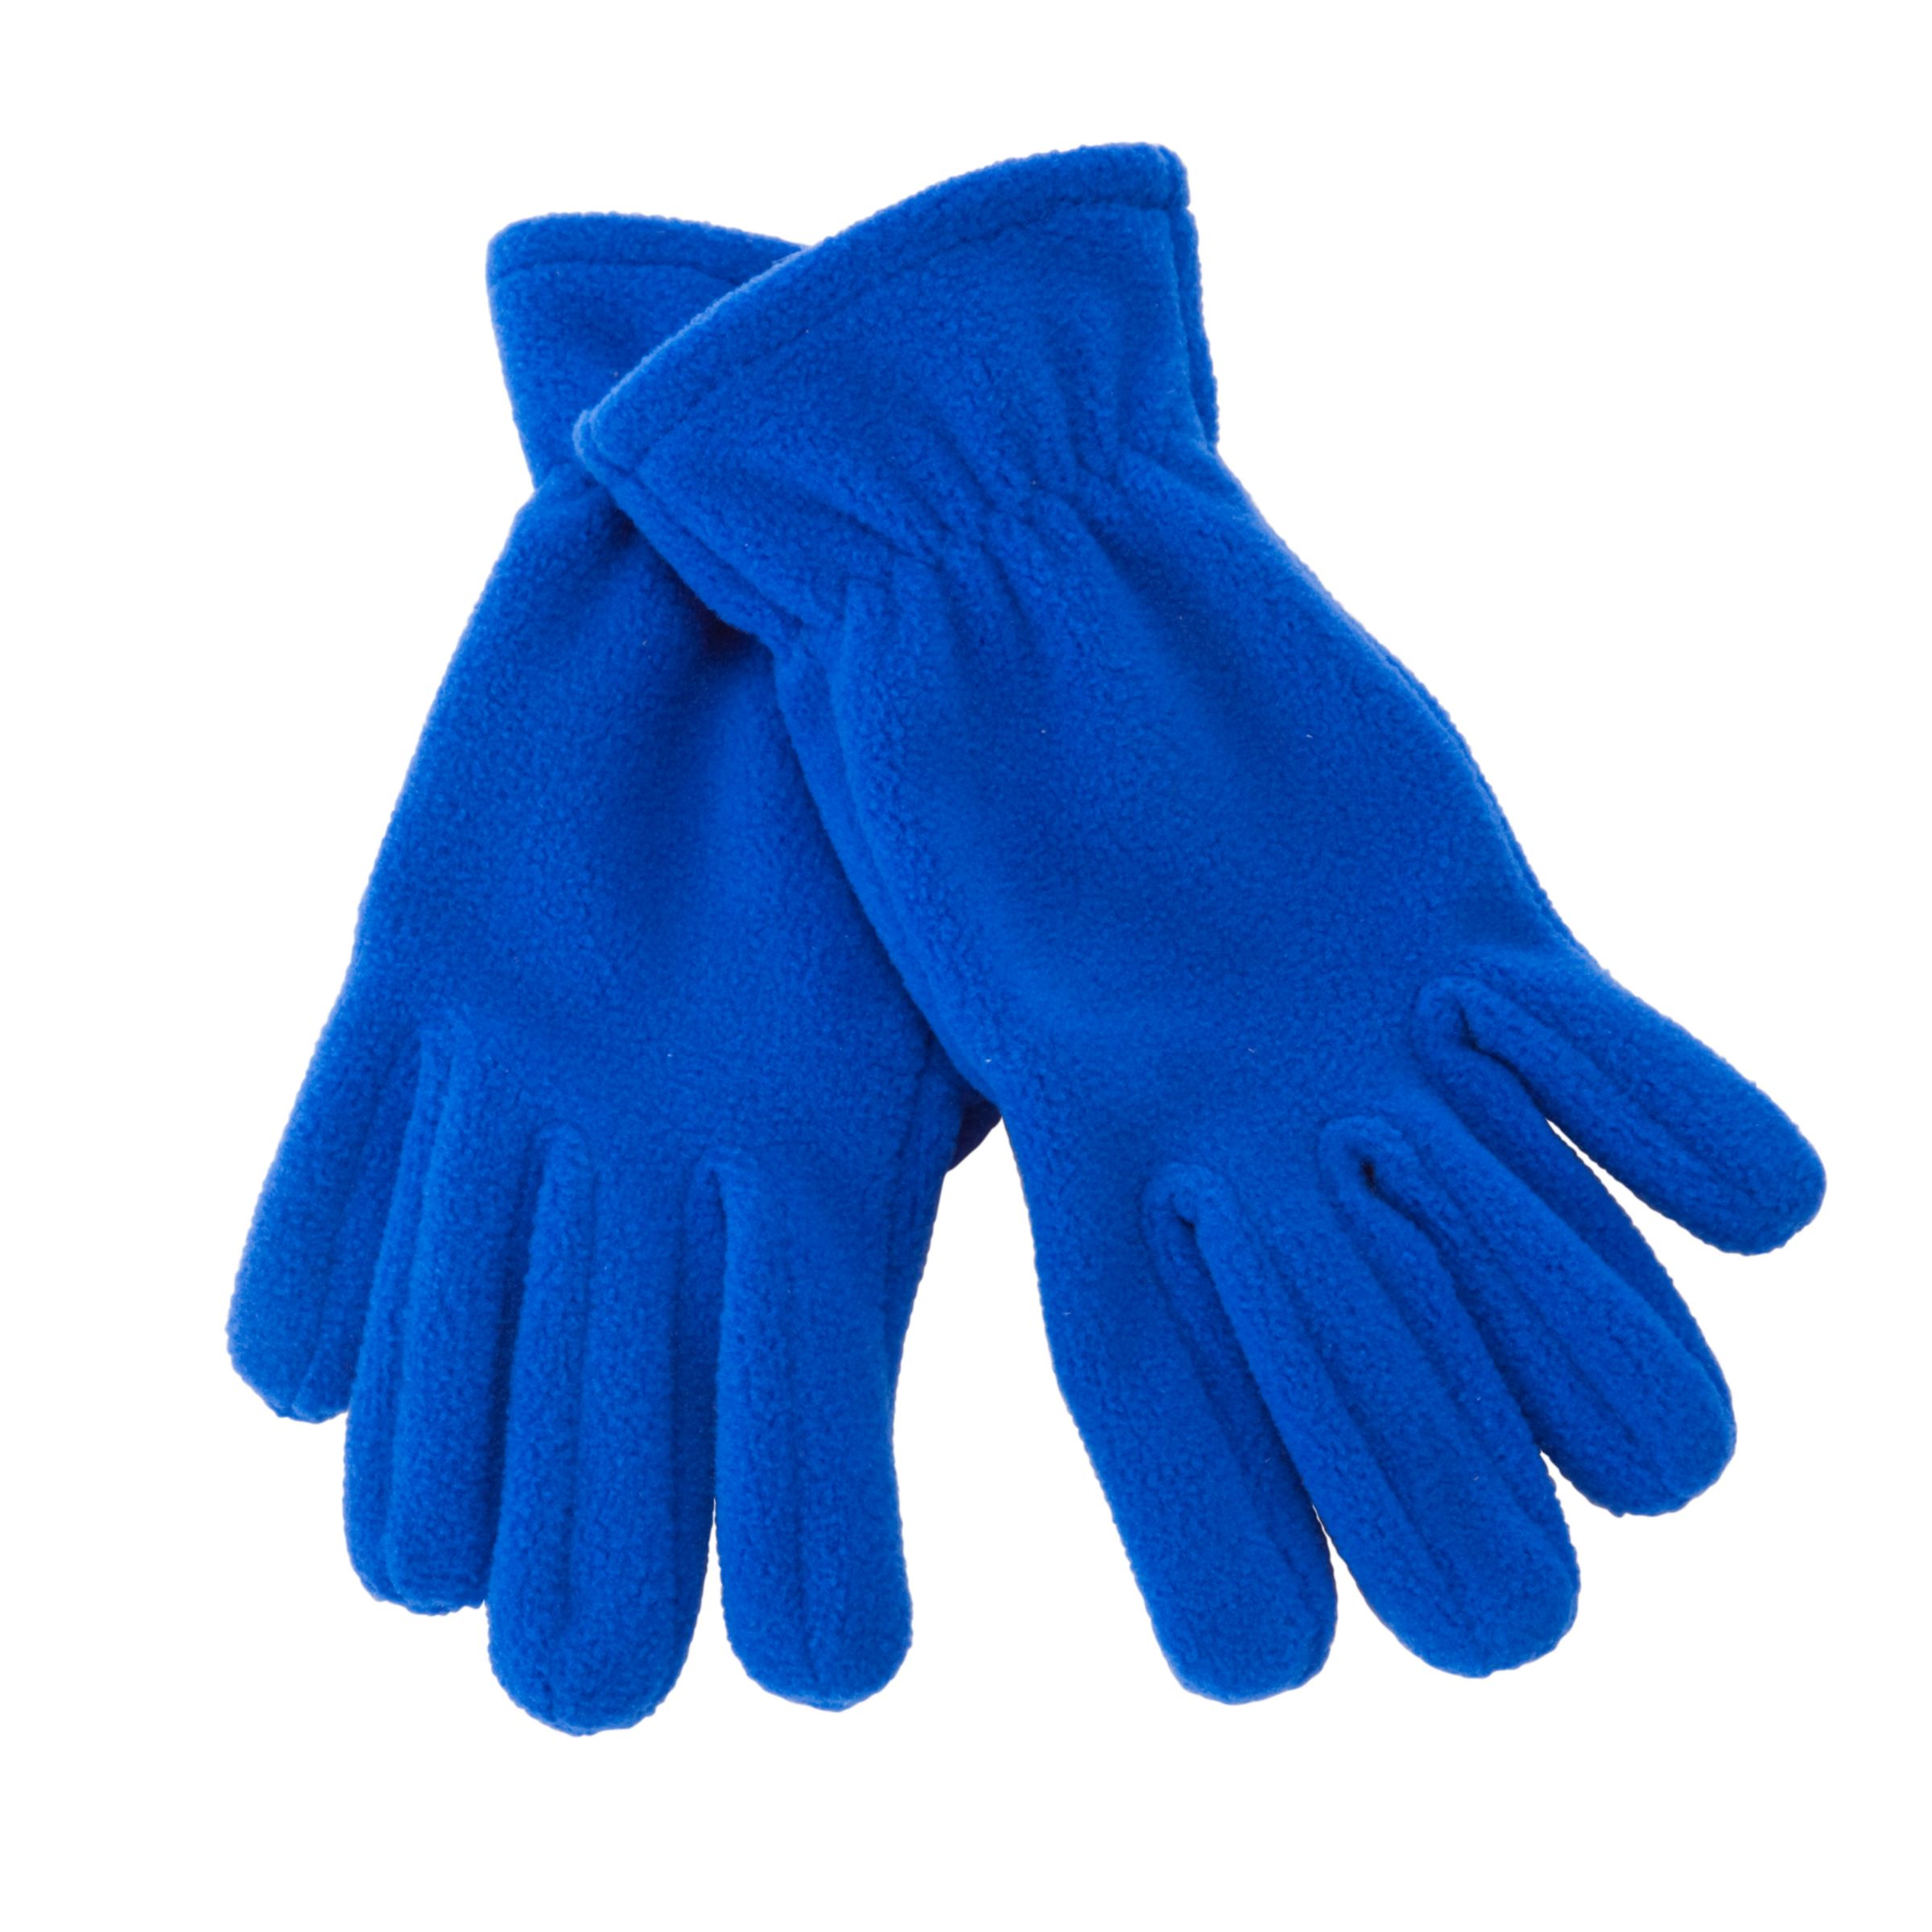 John Lewis Unisex Fleece Gloves, Royal Blue 493144